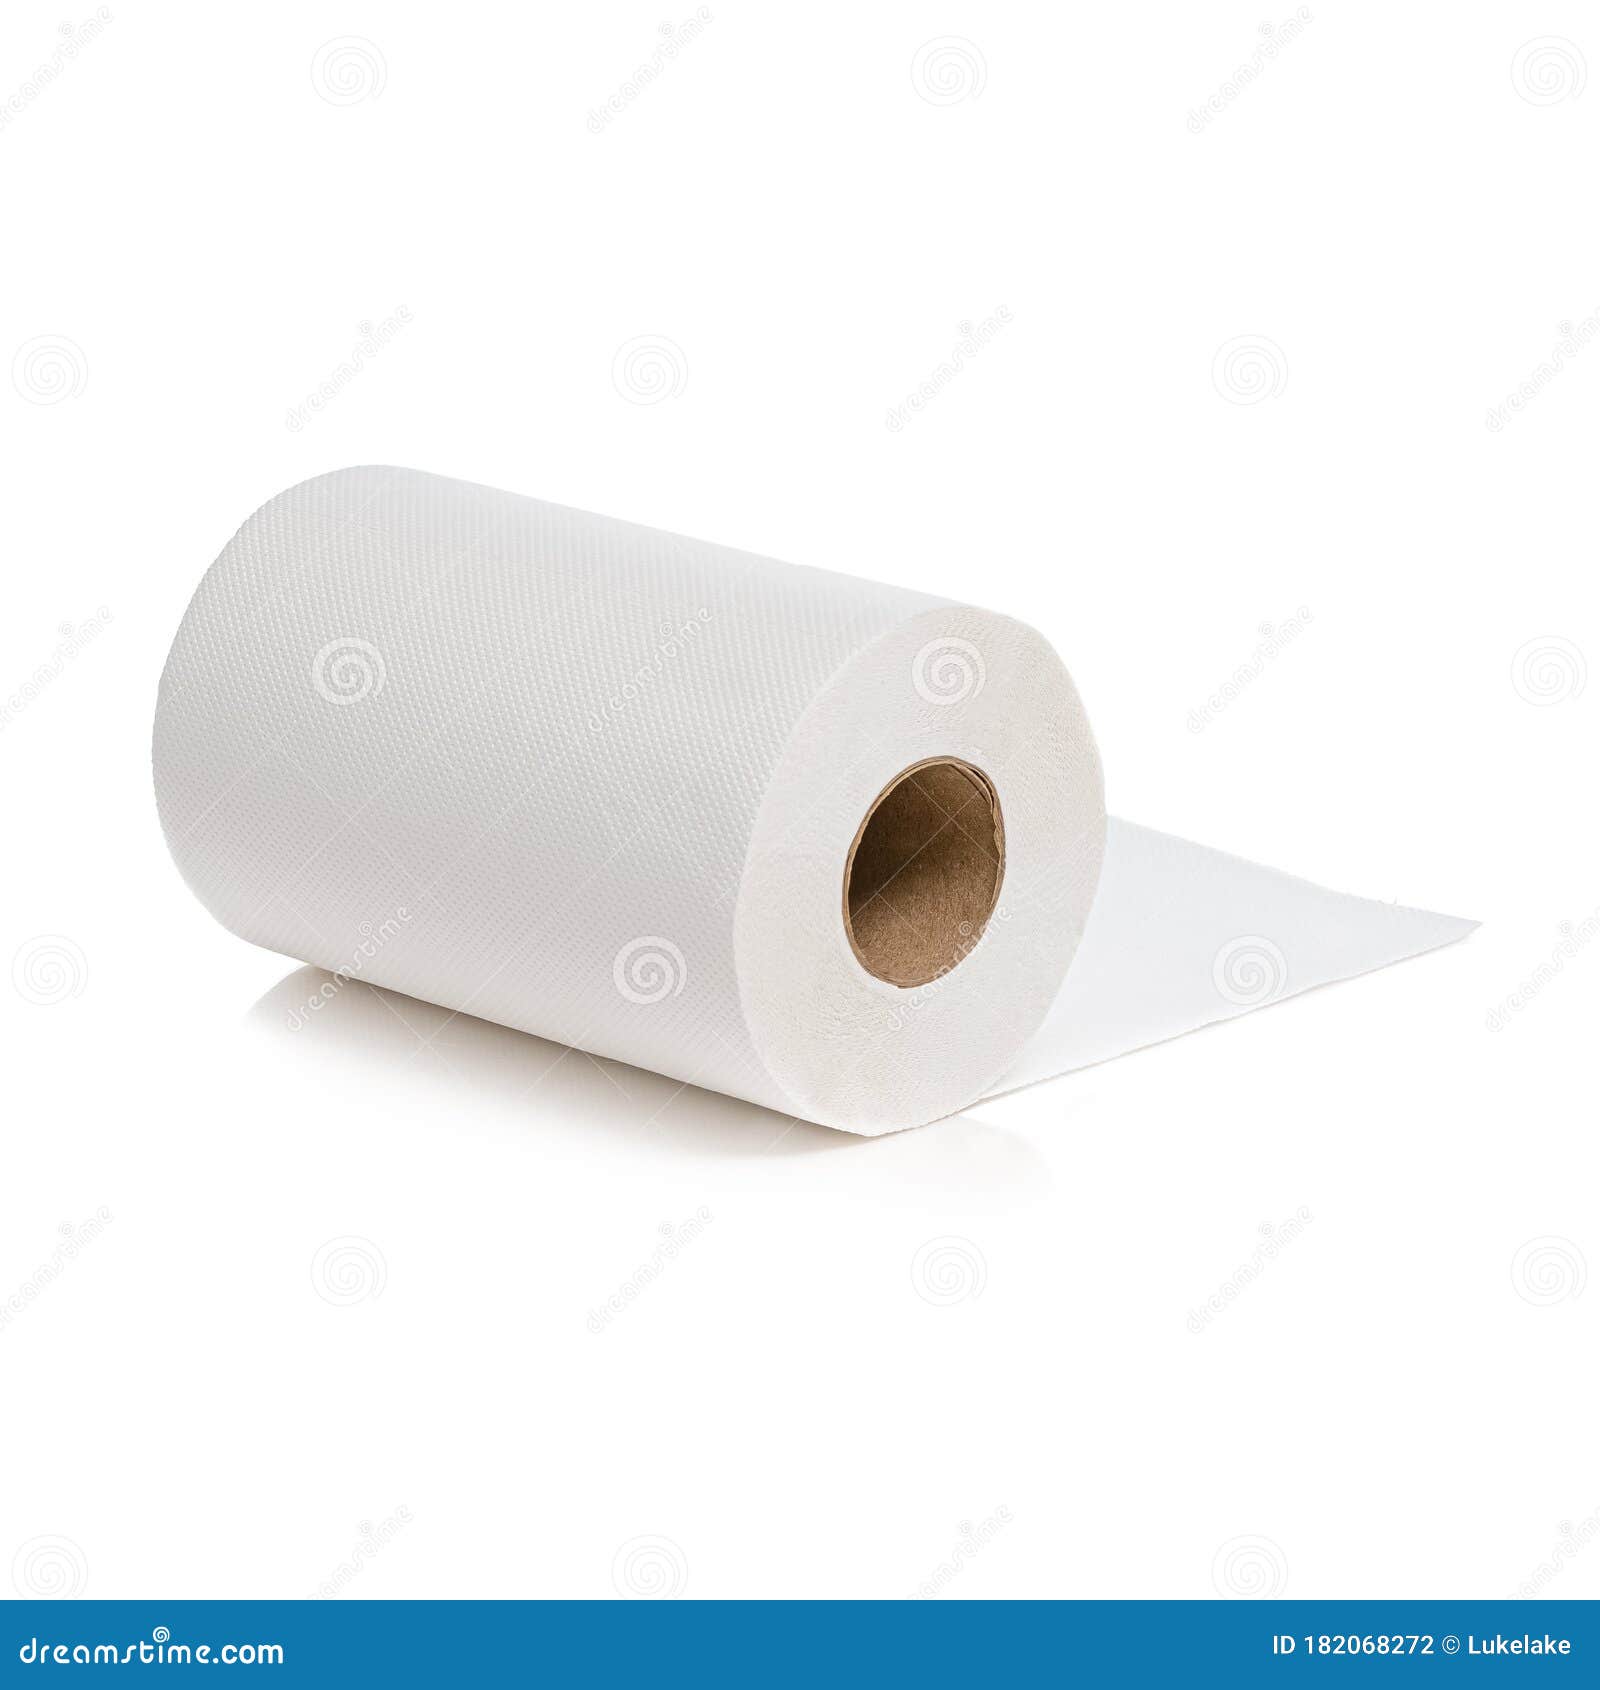 kitchen or toilet paper